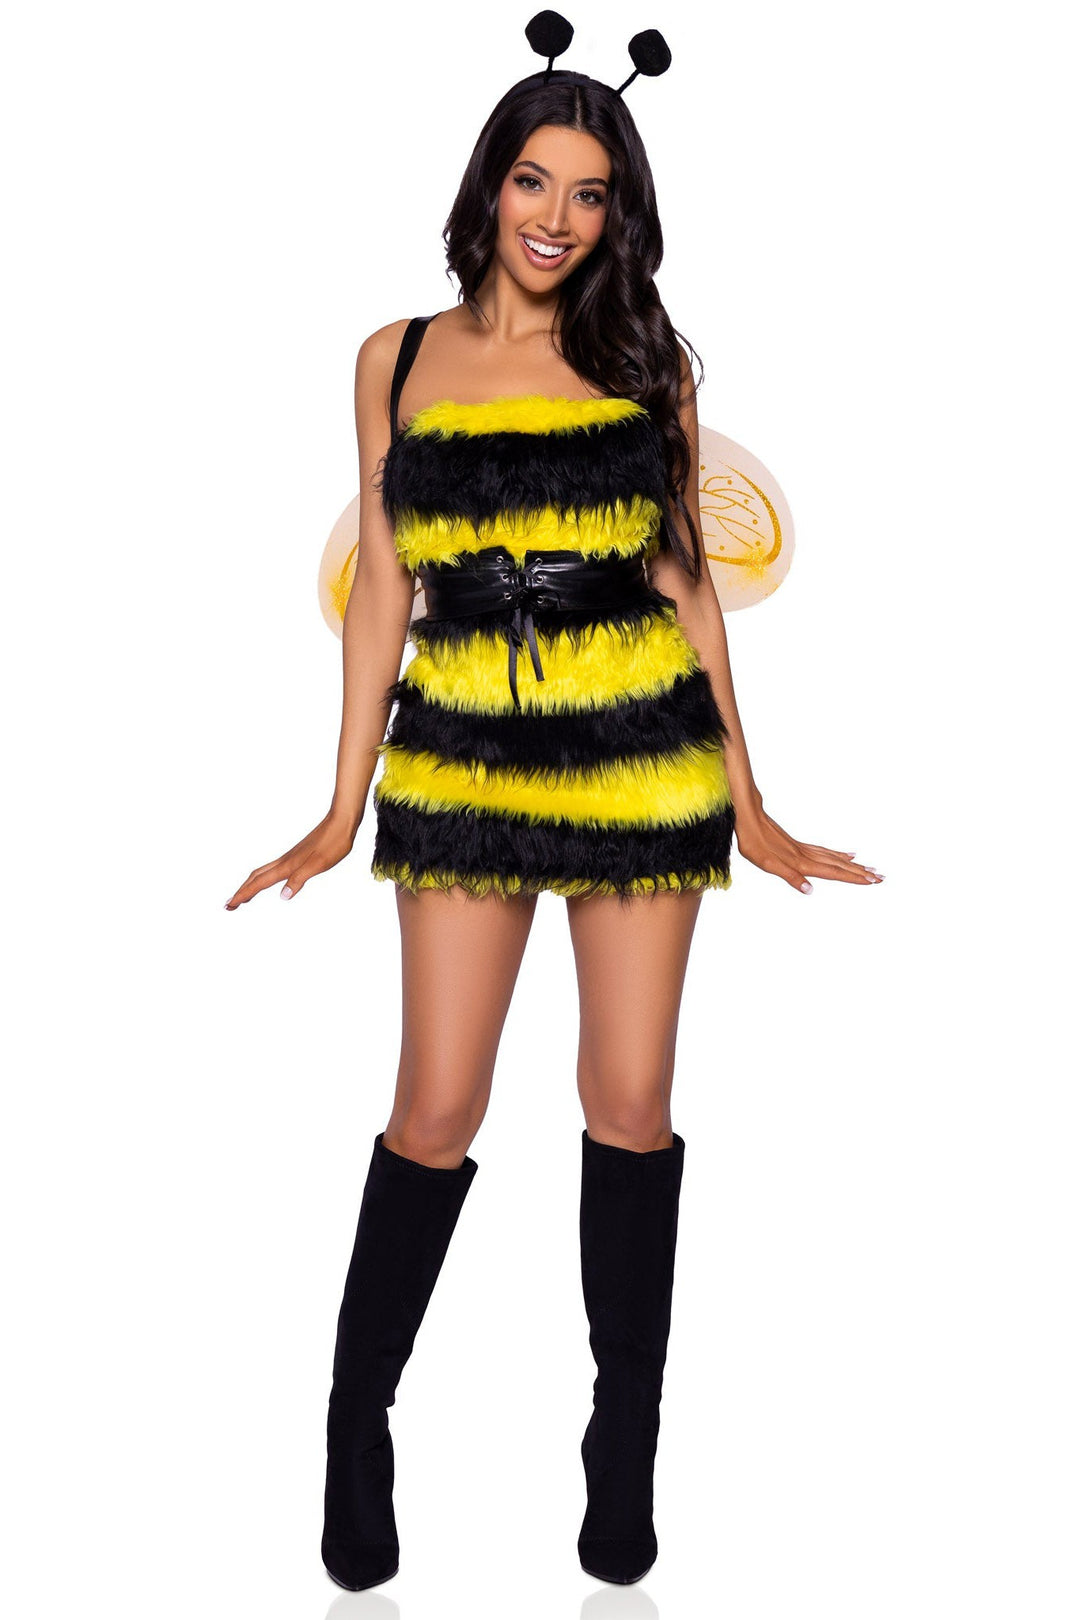 3PC. Bizzy Bee